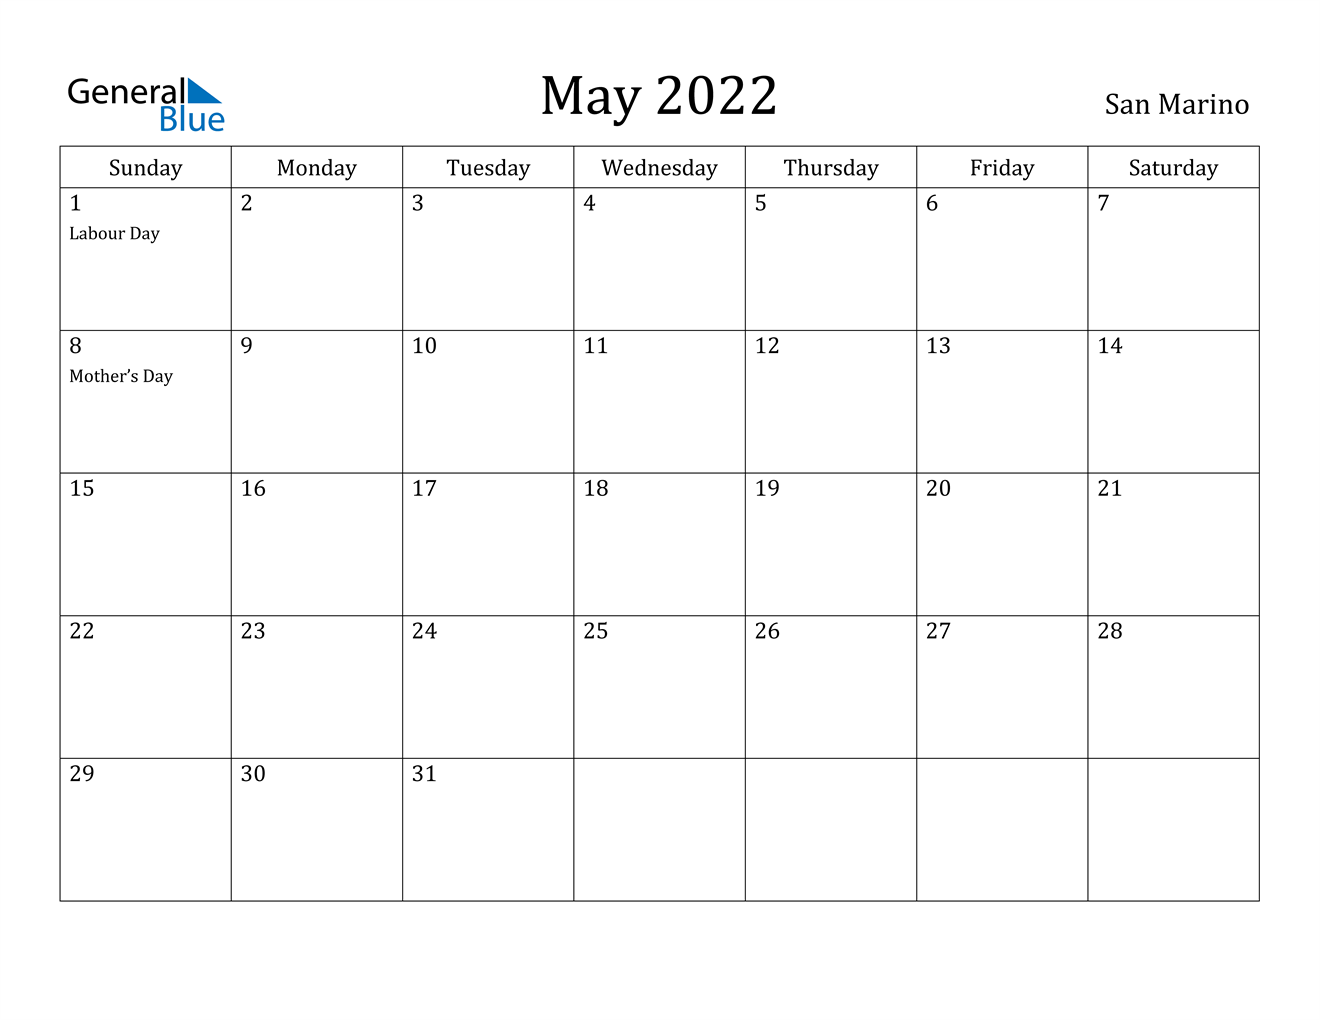 san marino may 2022 calendar with holidays